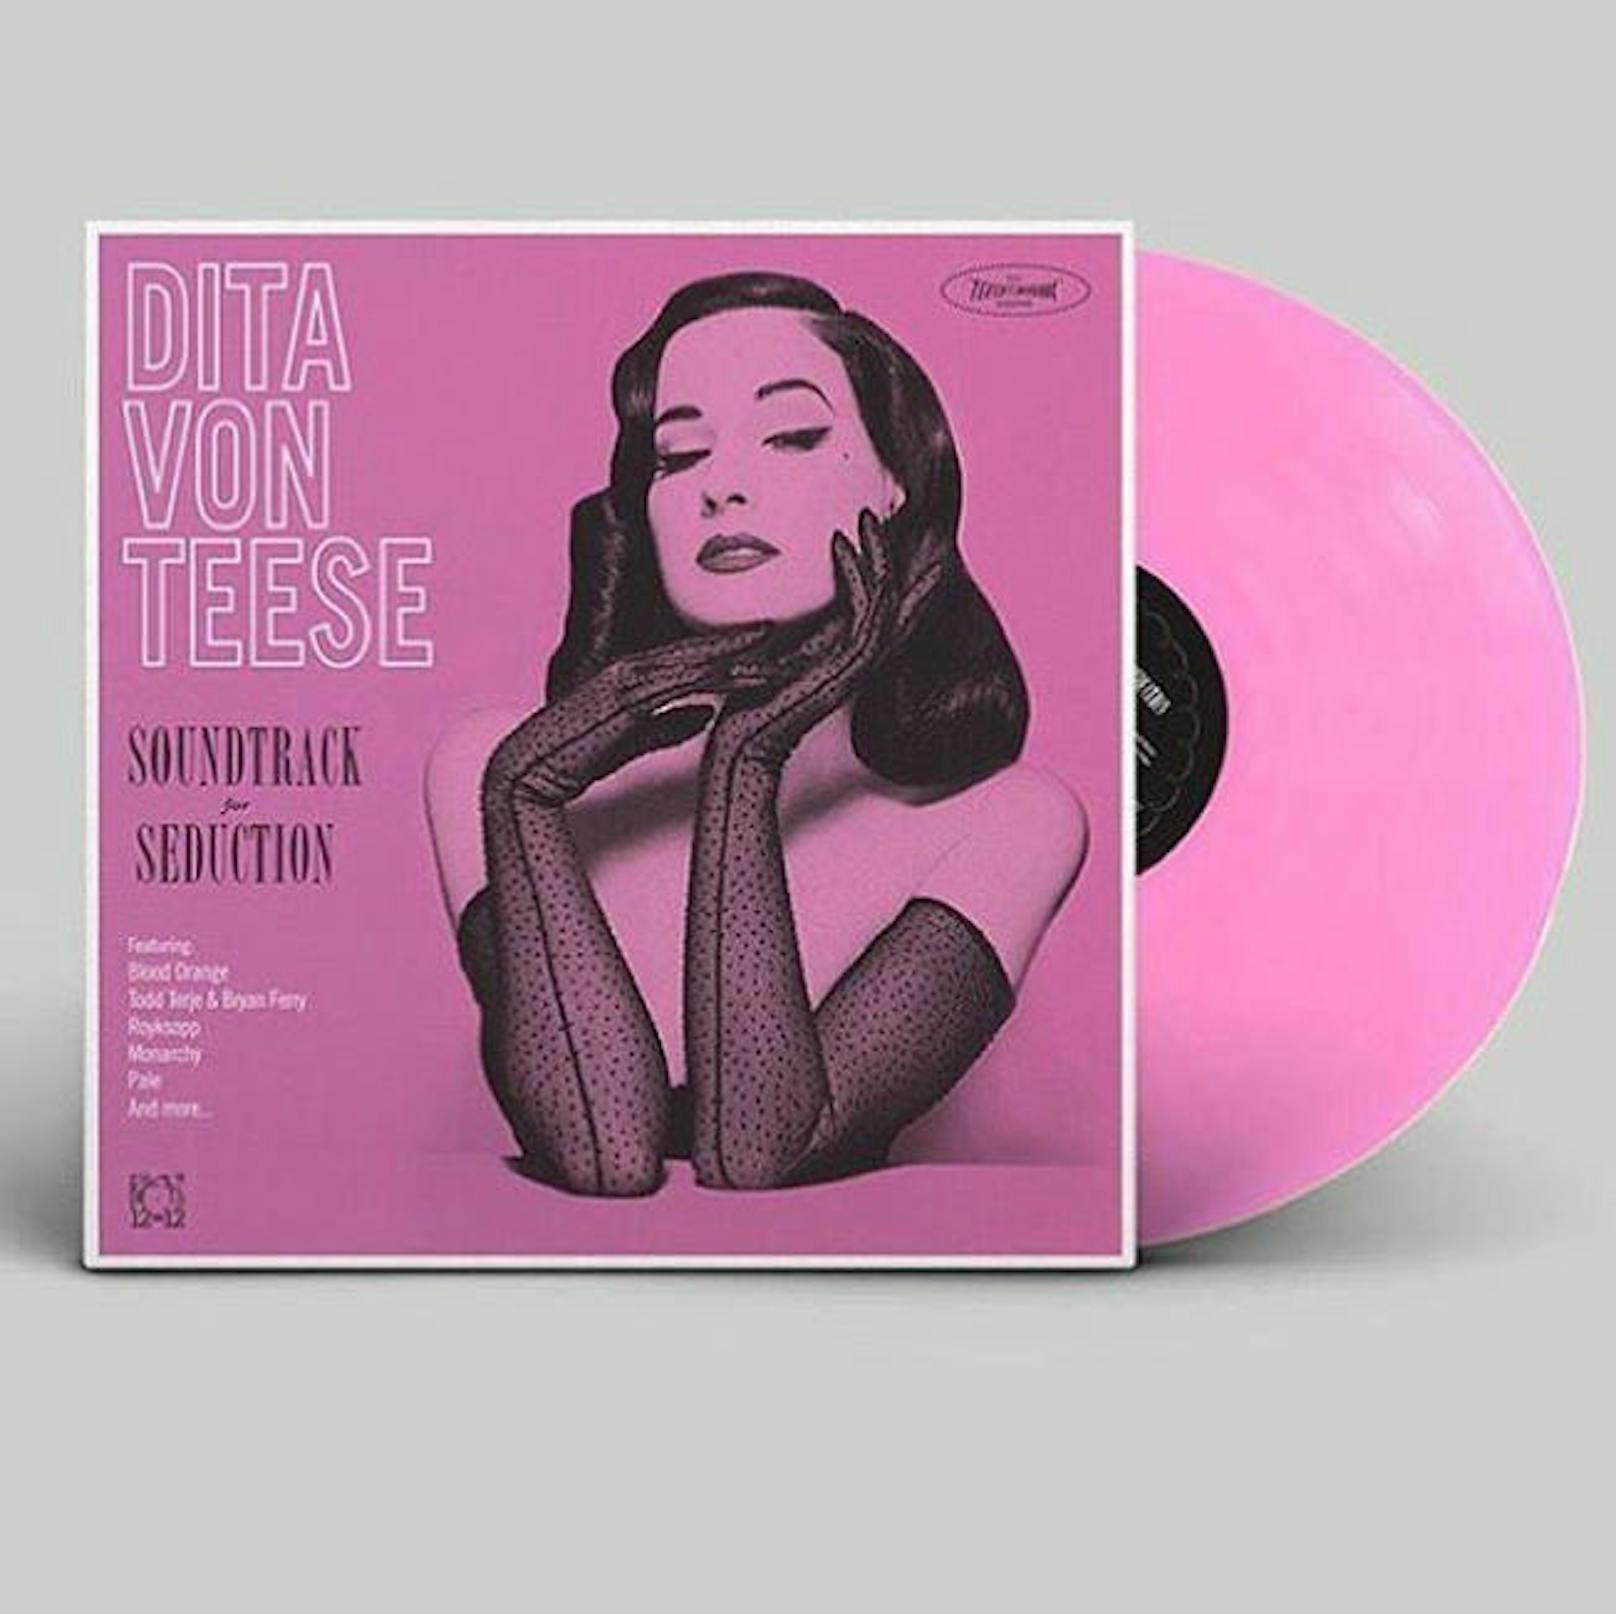 Dita Von Teese (Soundtrack of Seduction)